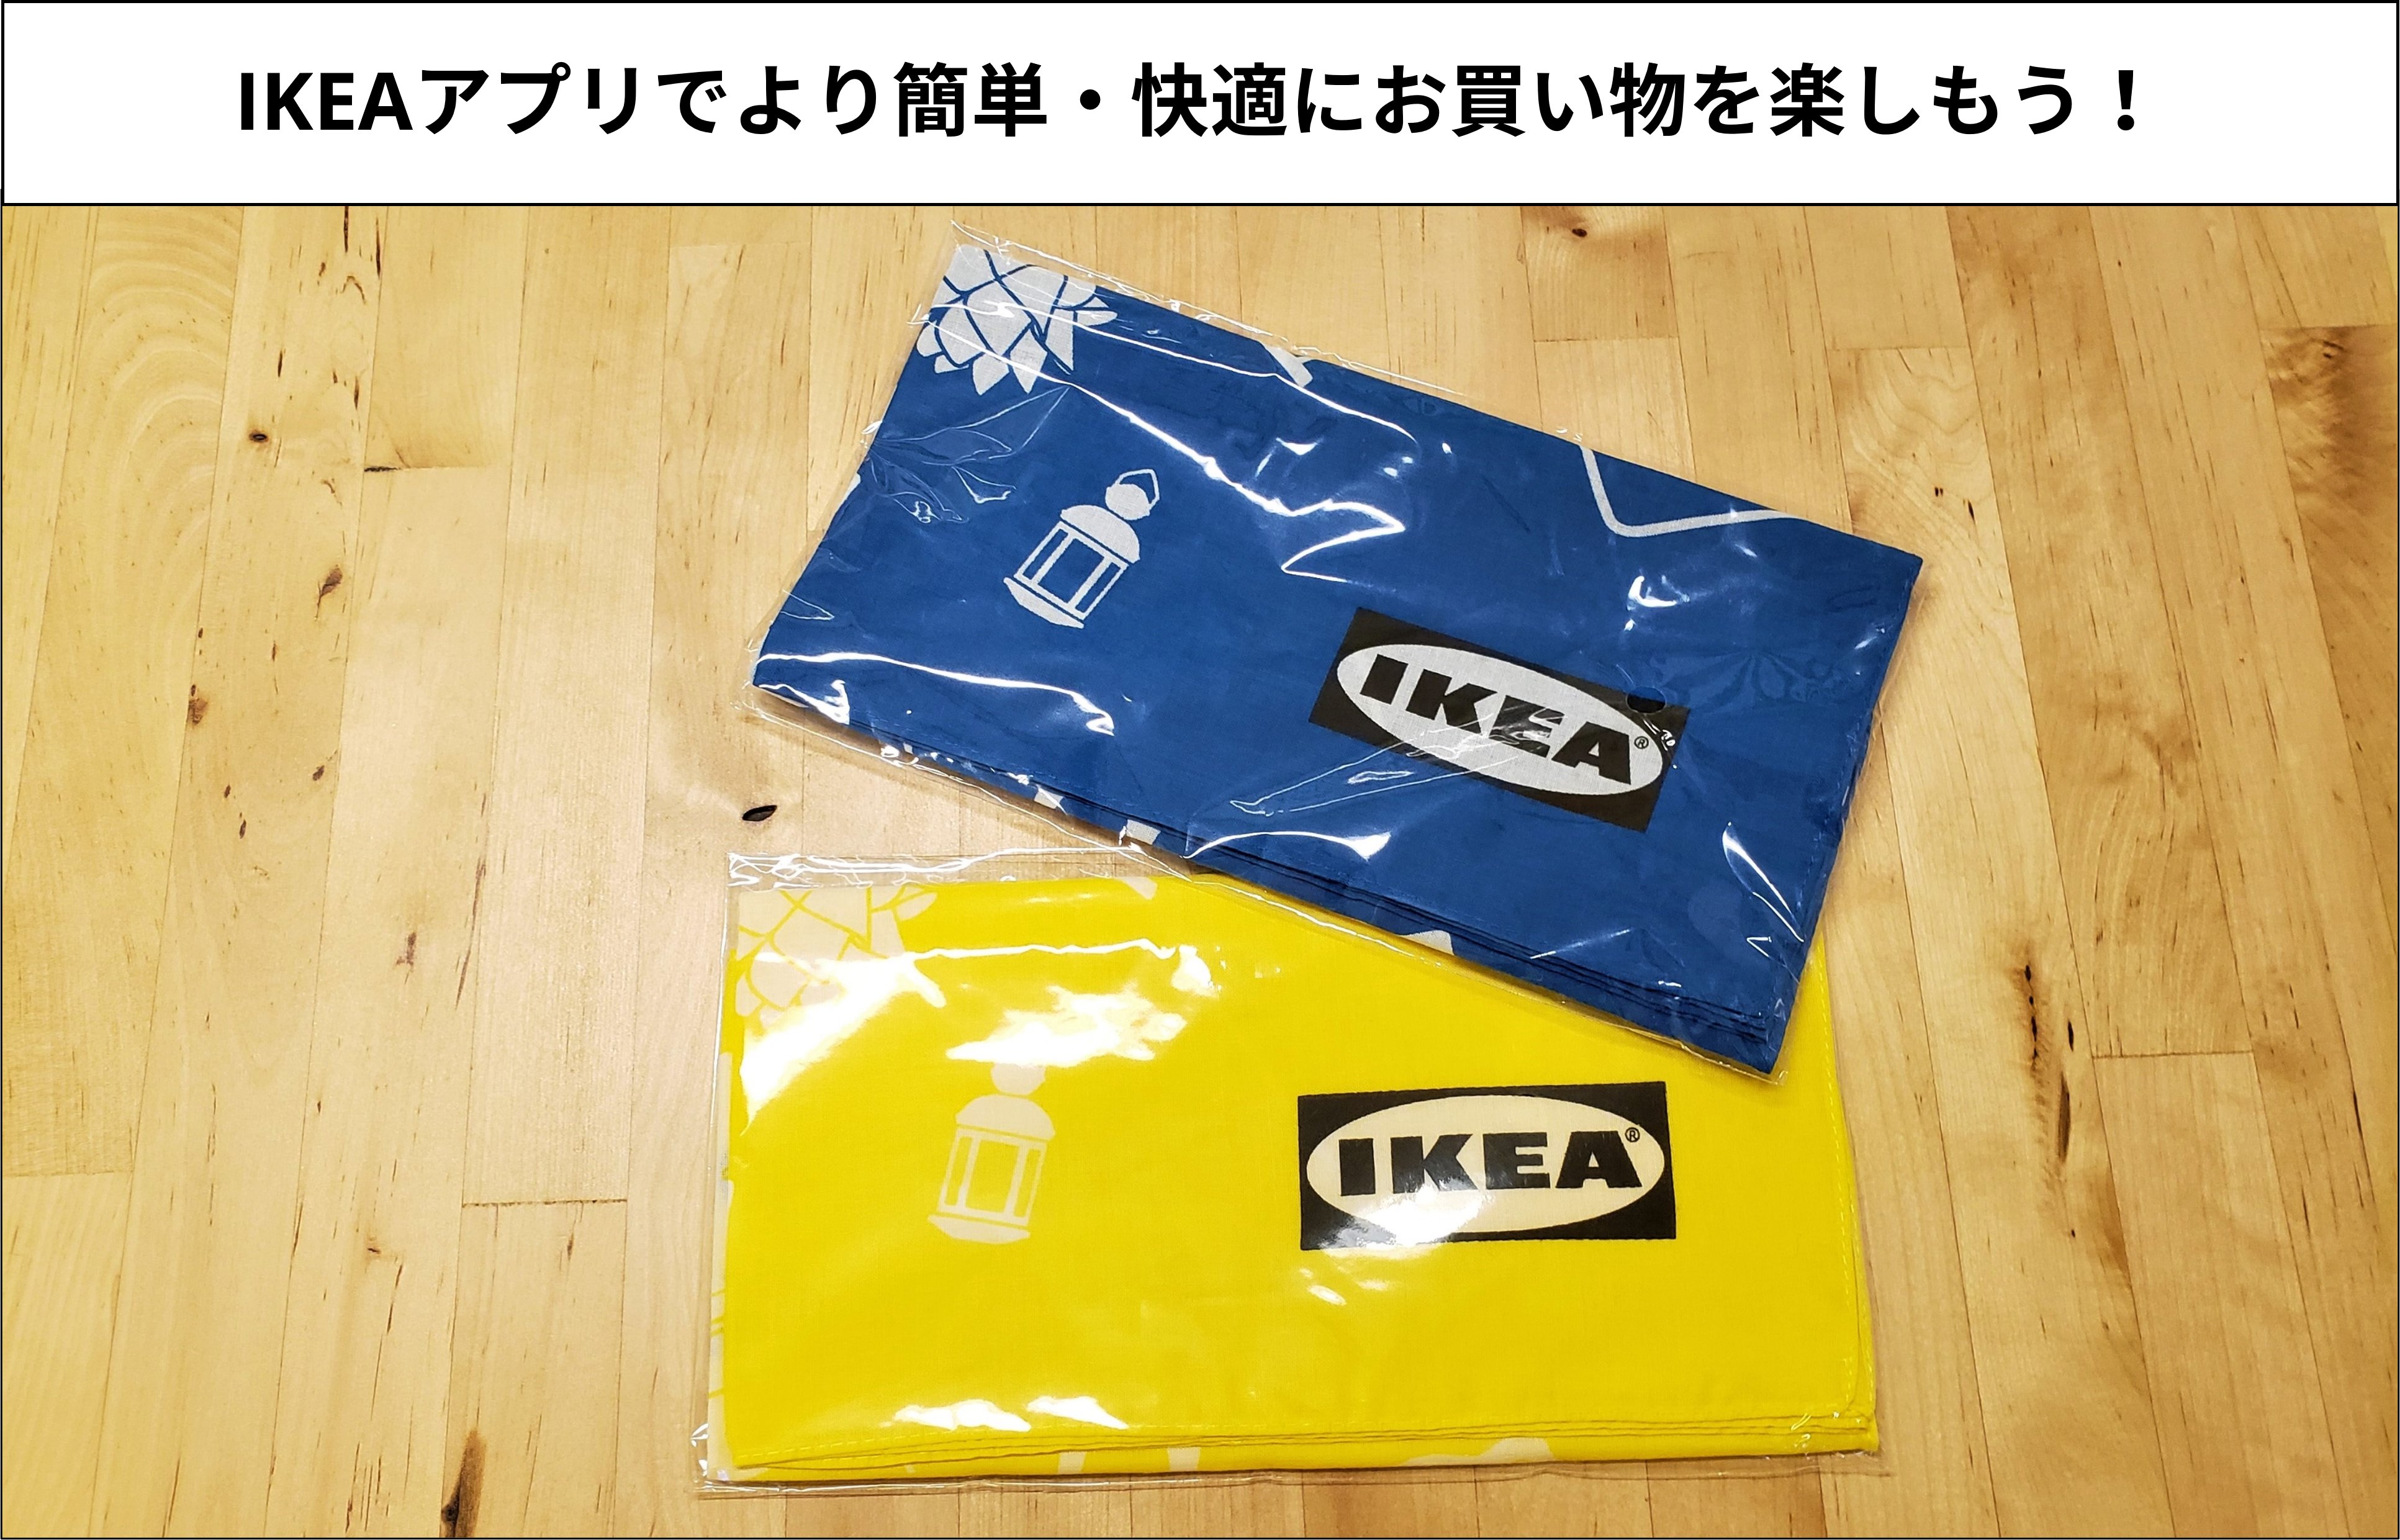 Ikea Tokyo Bay 公式 Ikea Tokyobay Twitter